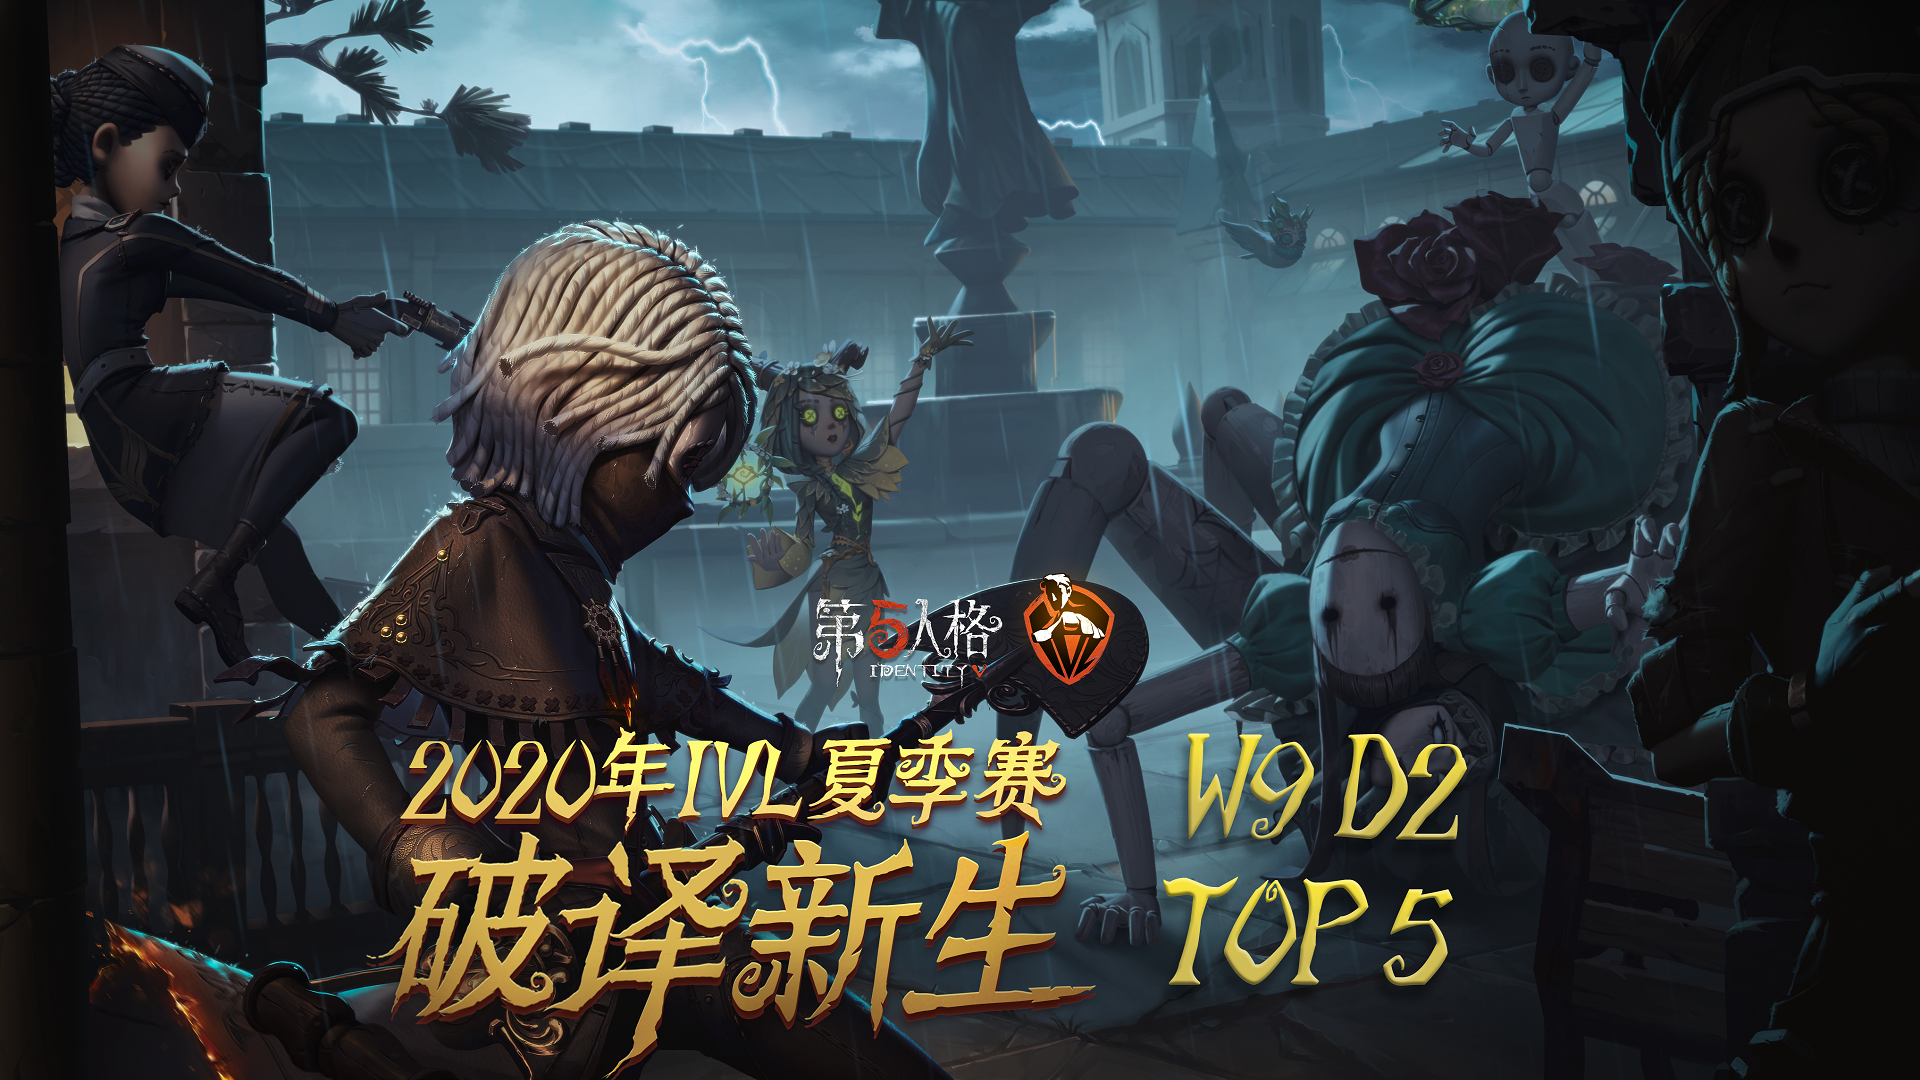 【2020IVL】W9D2 TOP5：Yue红夫人守椅神准镜像 一镜双刀拿下四抓